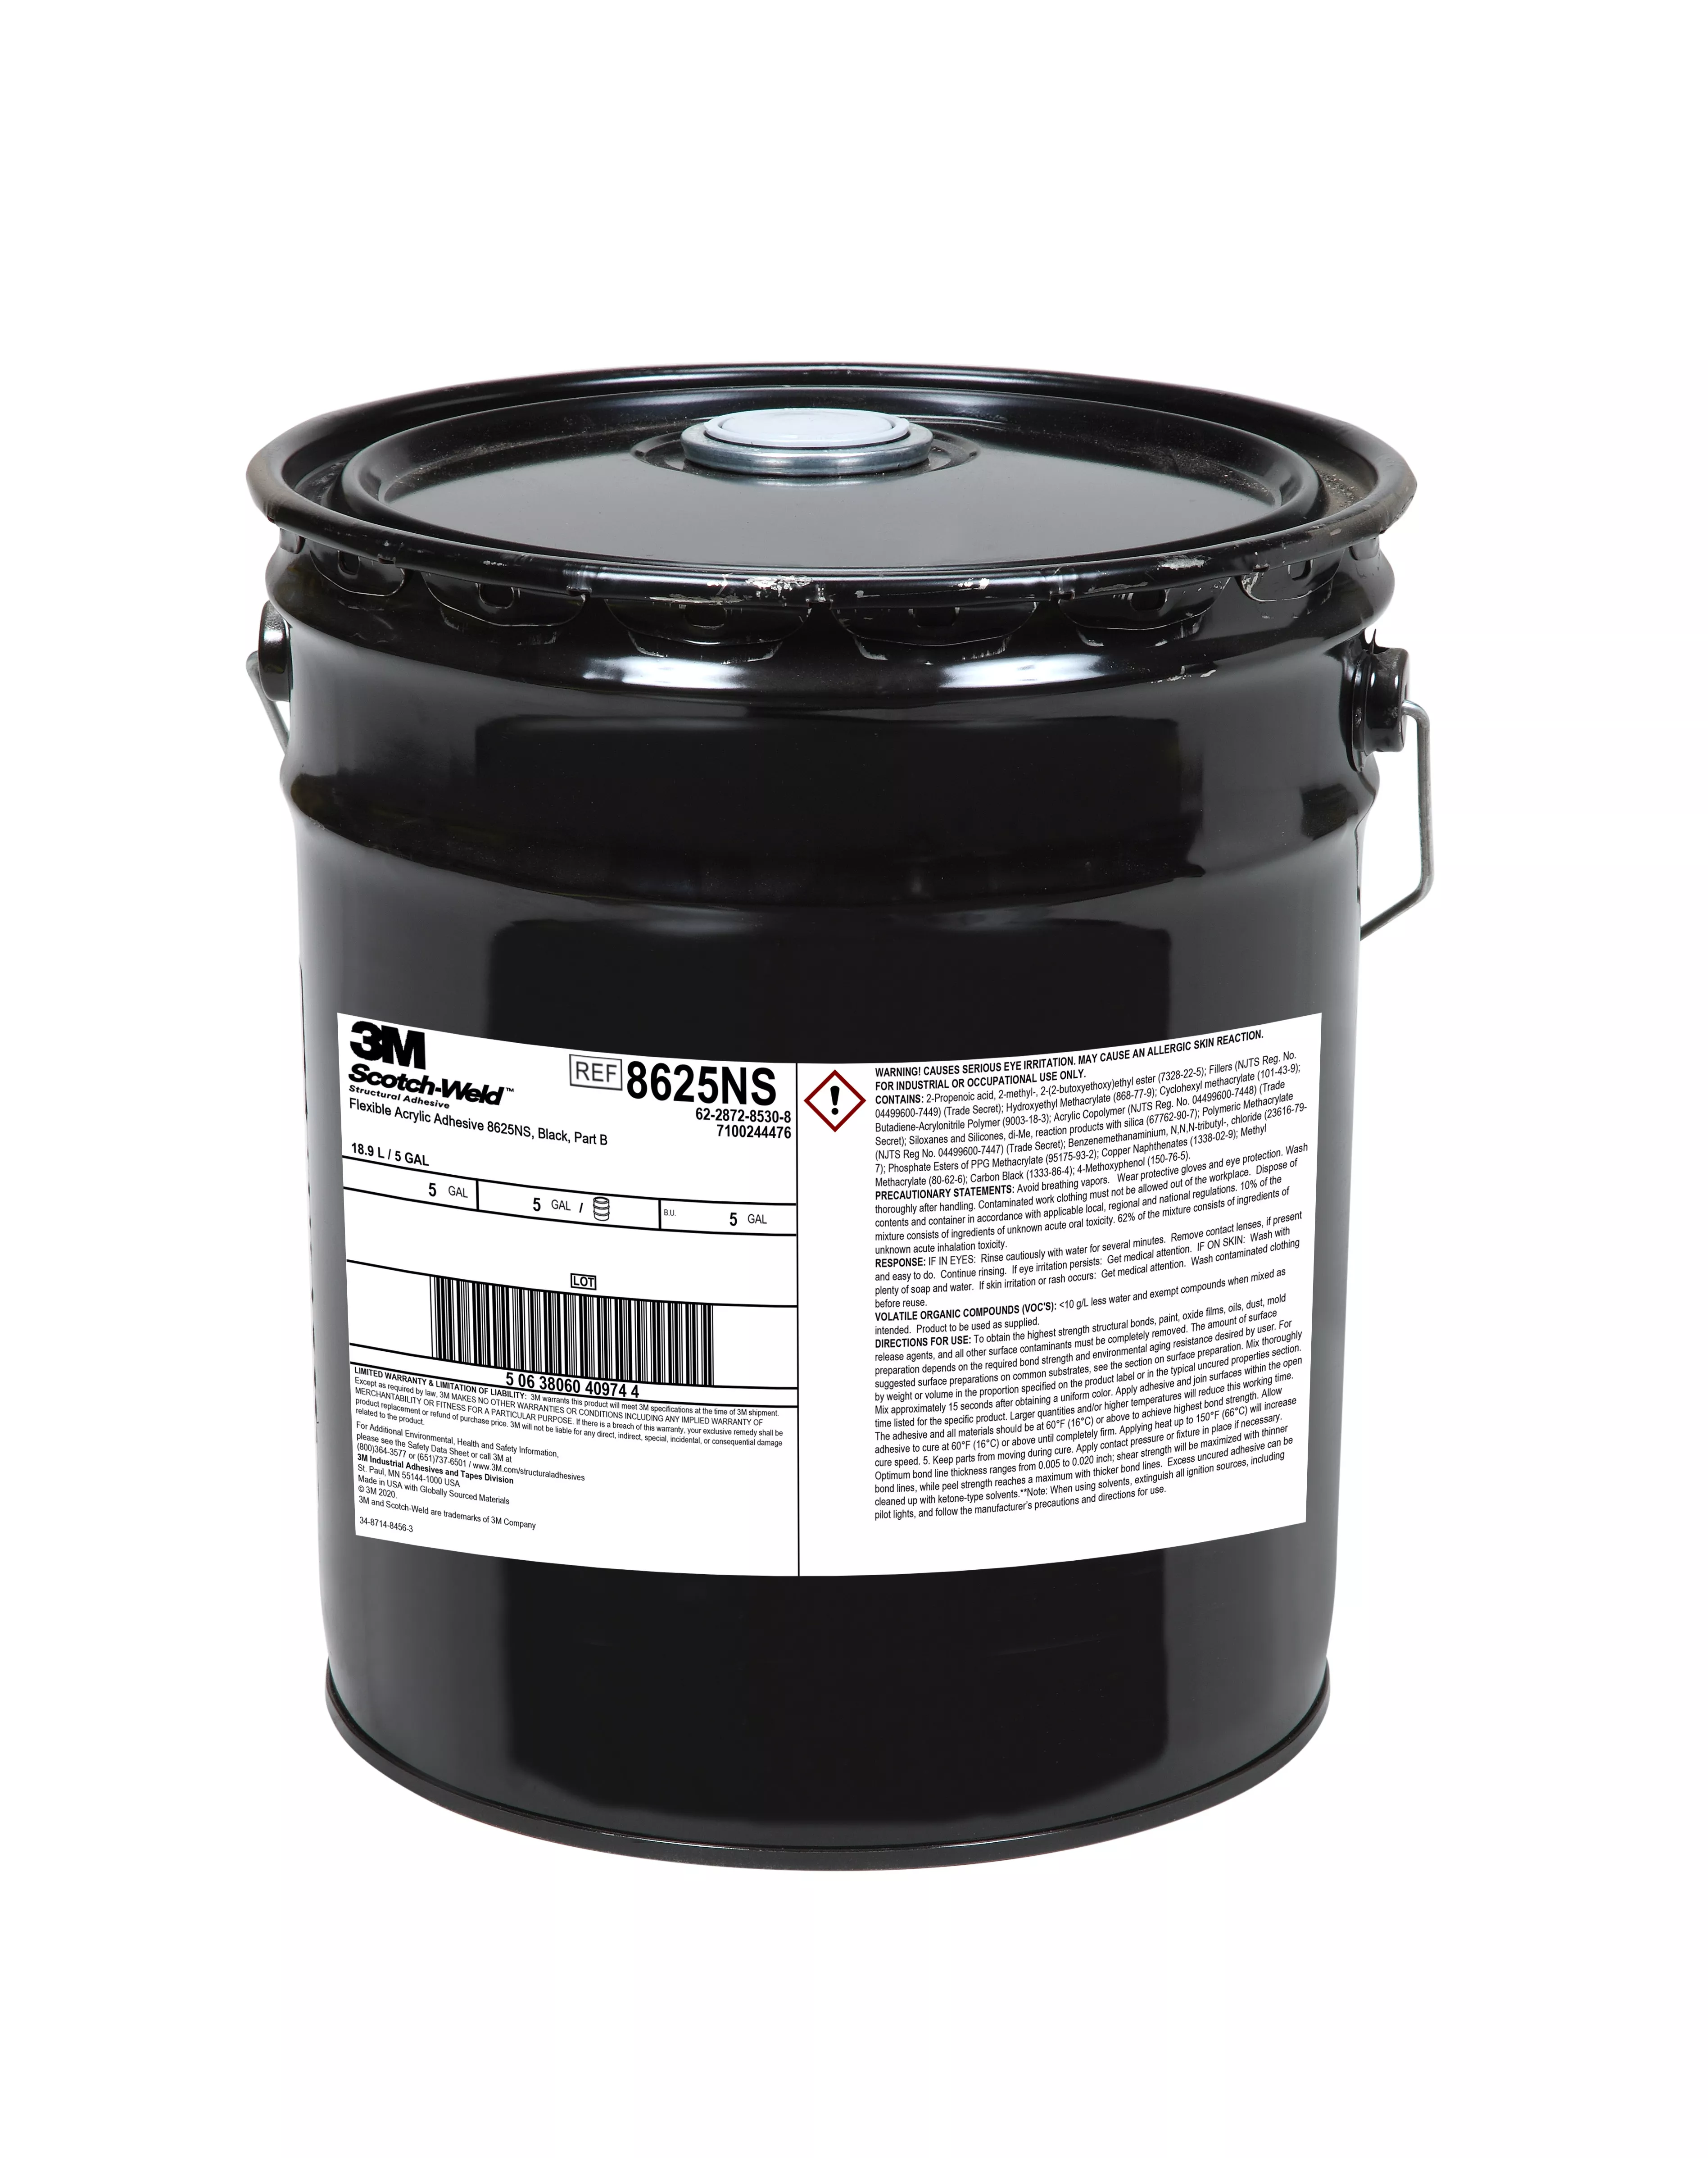 3M™ Scotch-Weld™ Flexible Acrylic Adhesive 8625NS, Black, Part B, 5
Gallon (Pail), Drum